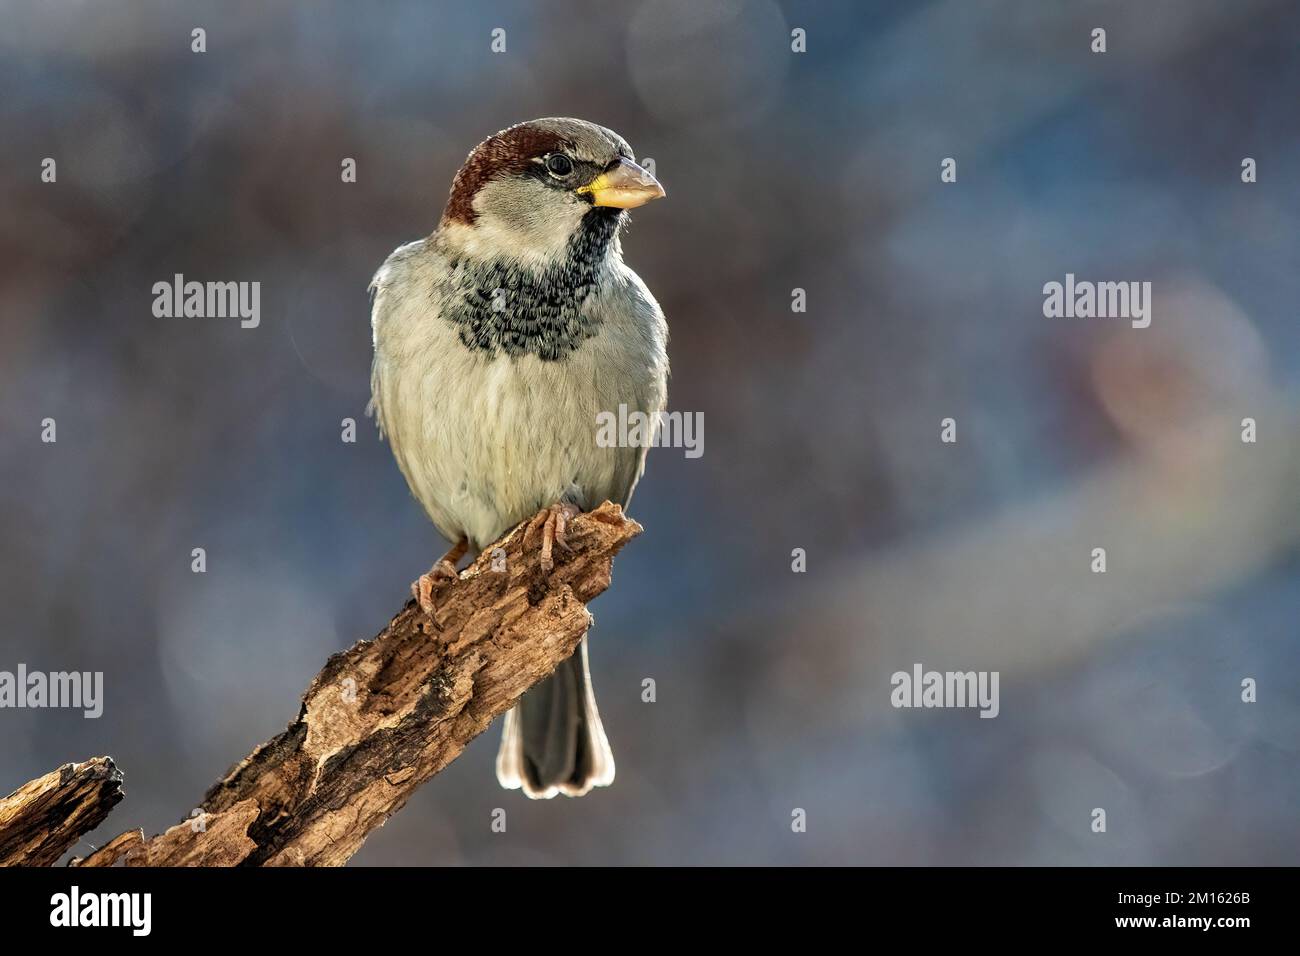 House sparrow close-up Stock Photo